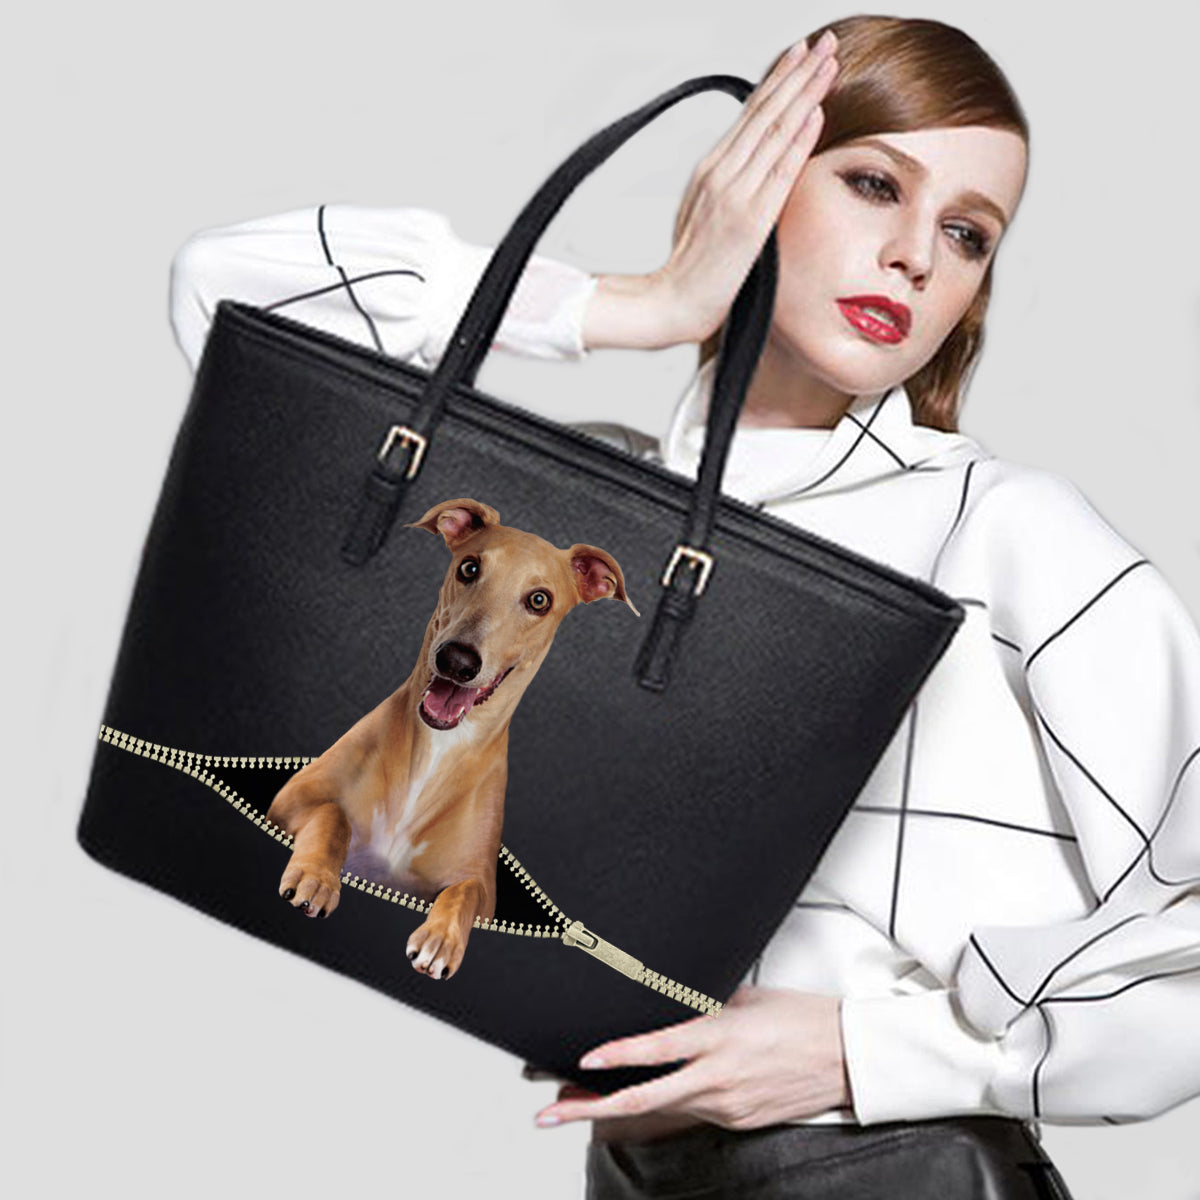 Greyhound Tote Bag V2